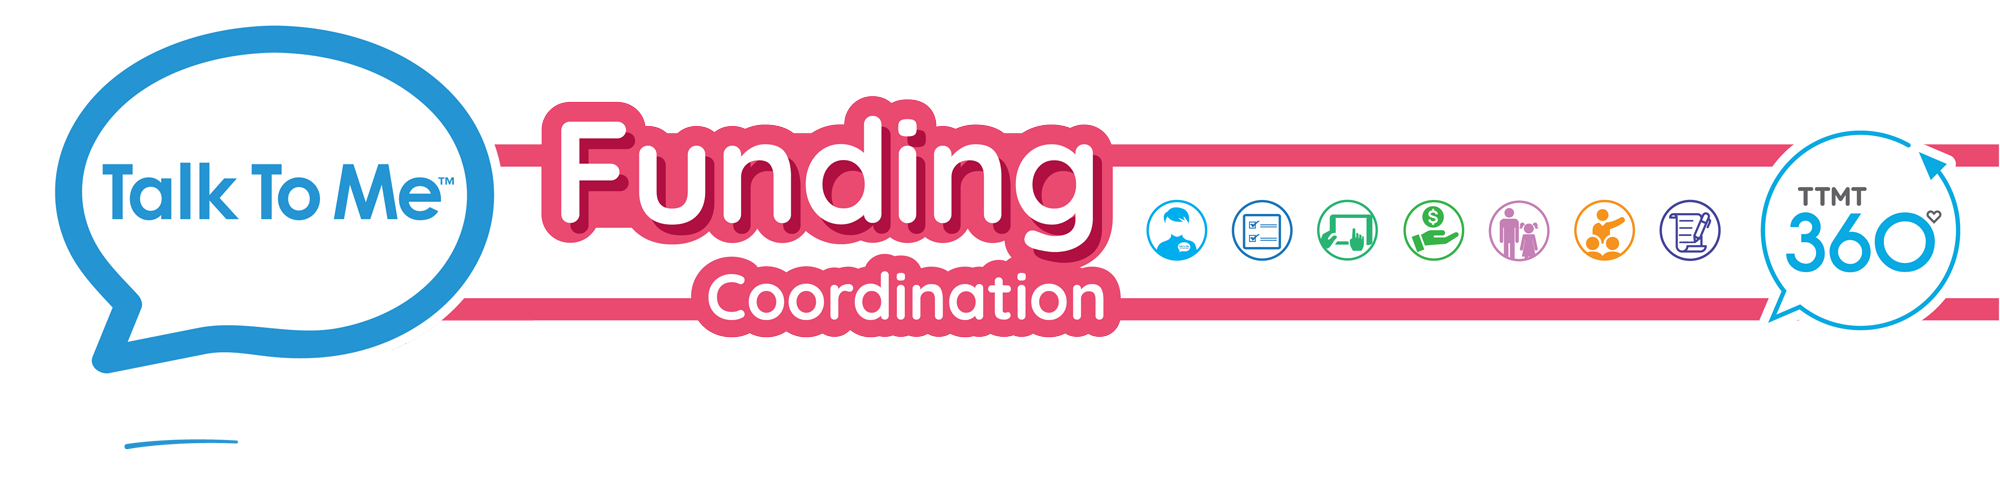 funding coordination header